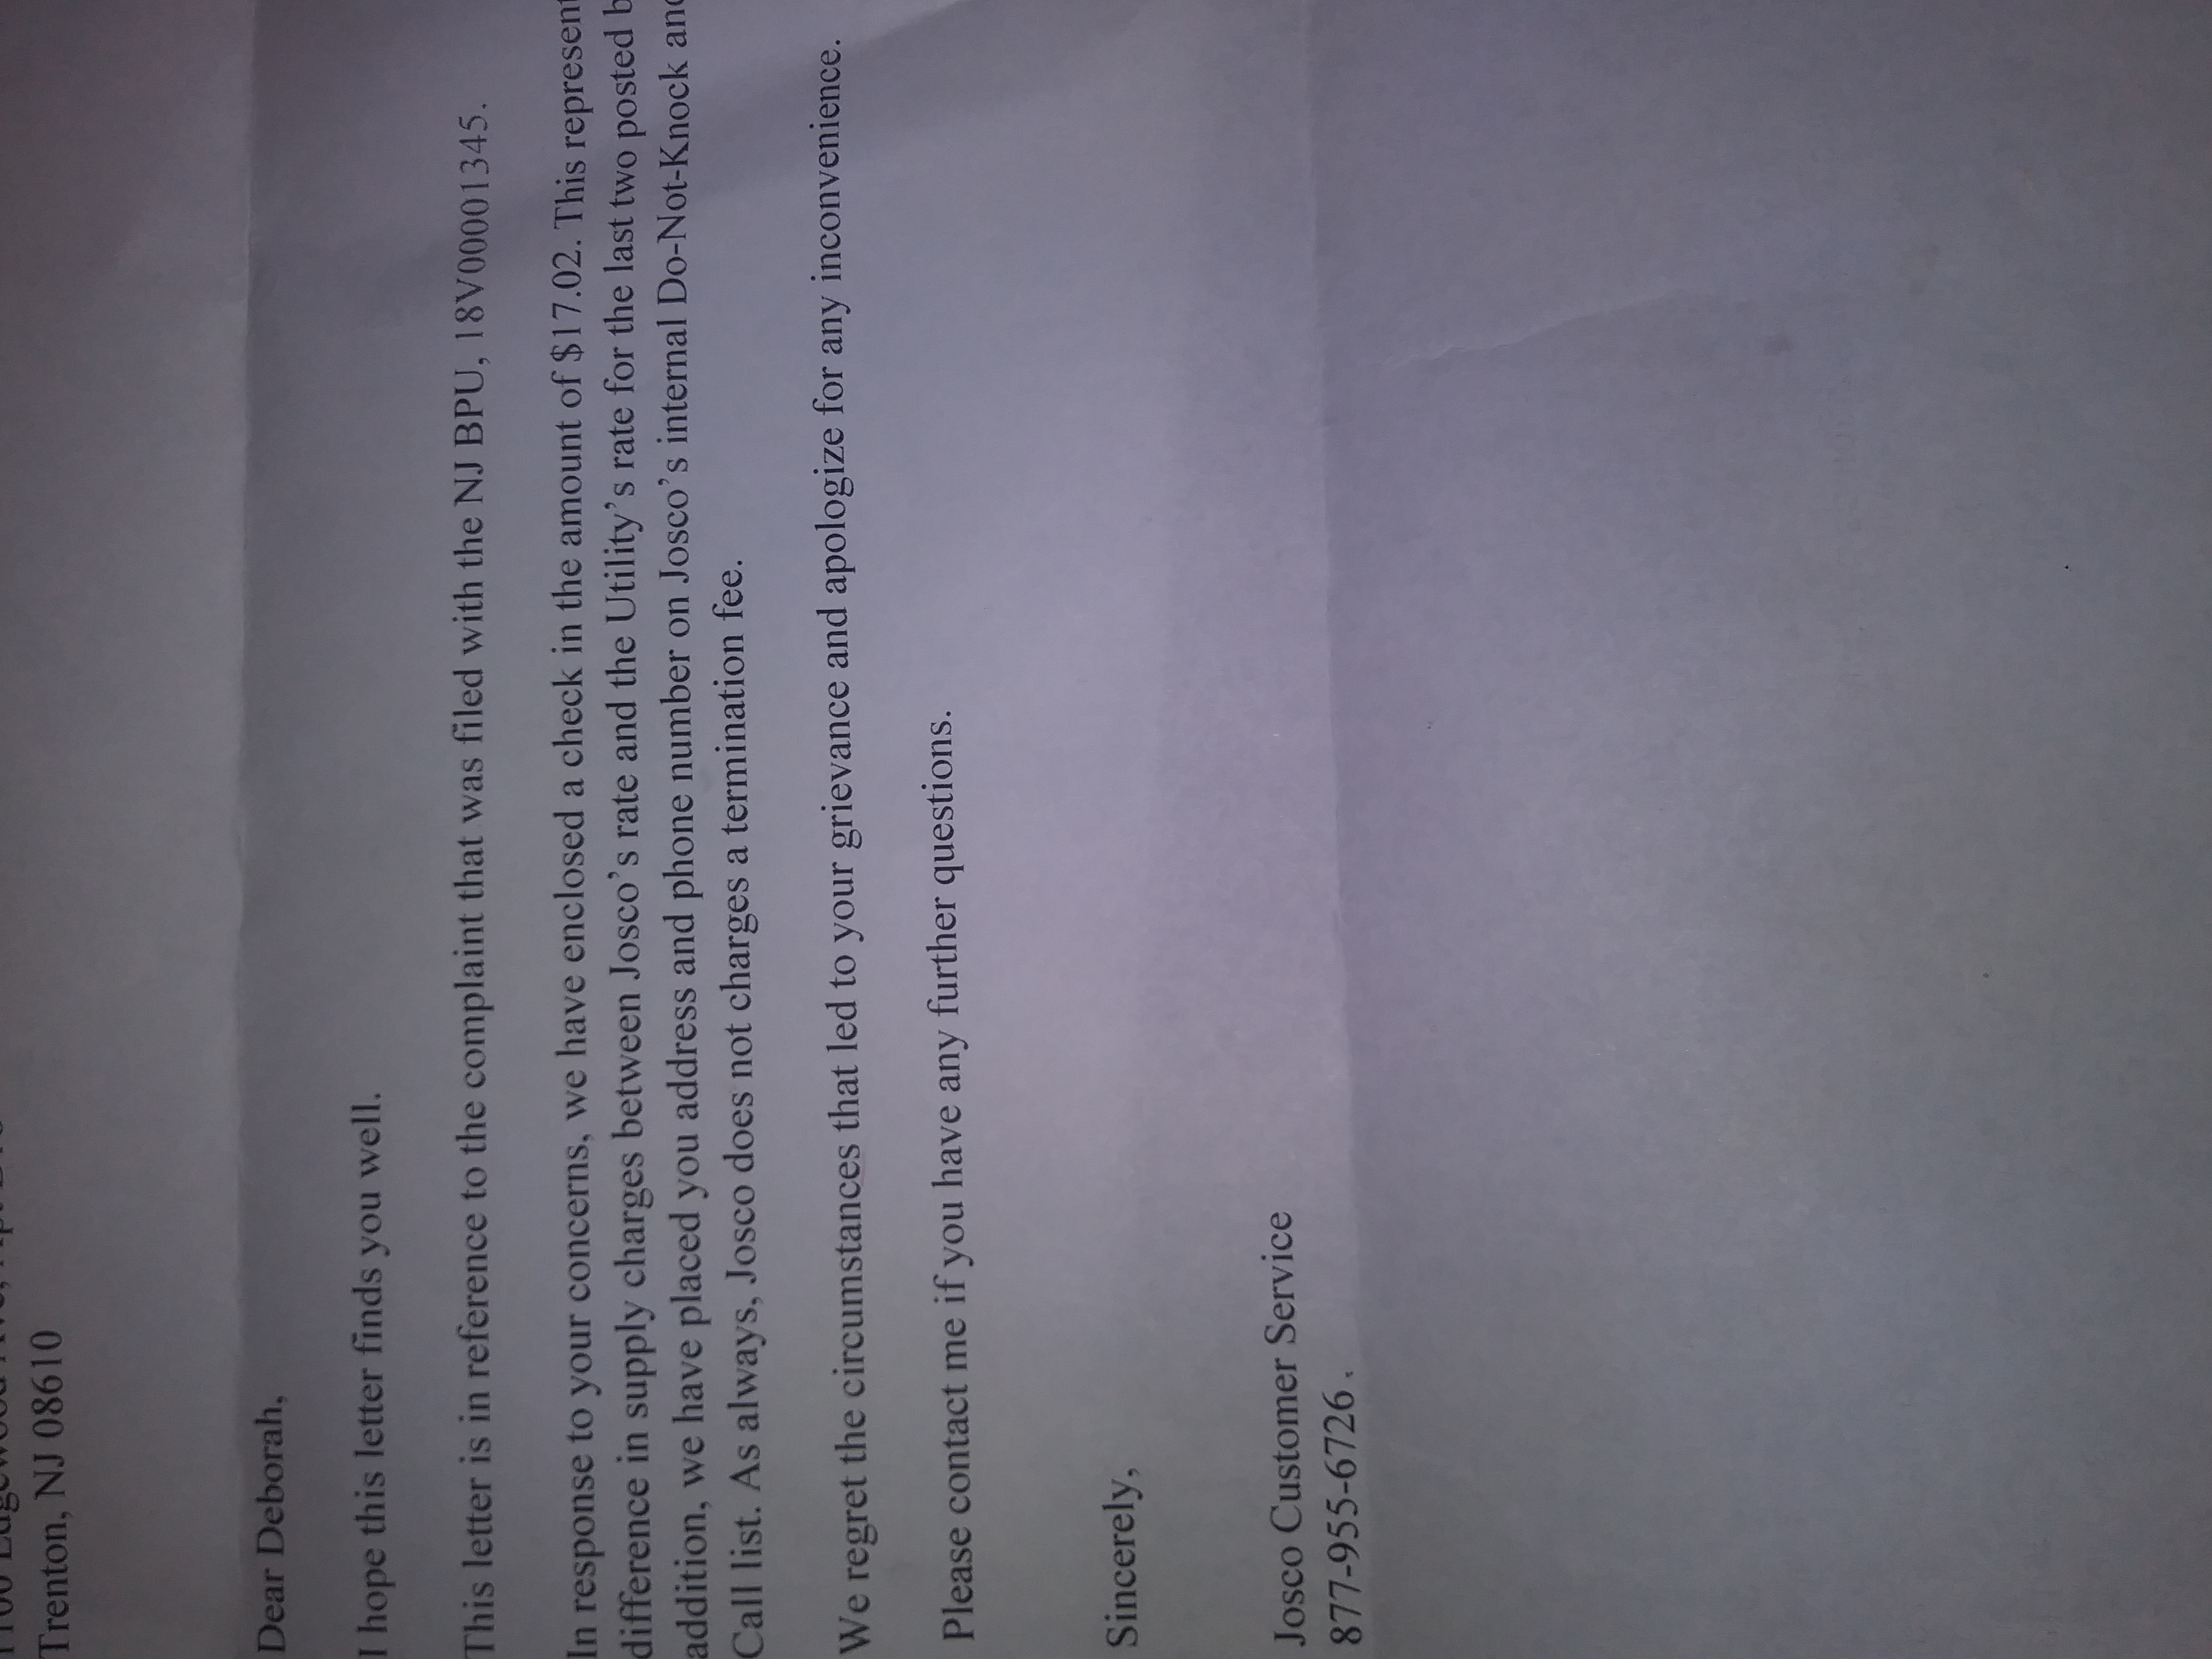 Josco's letter after my complaint